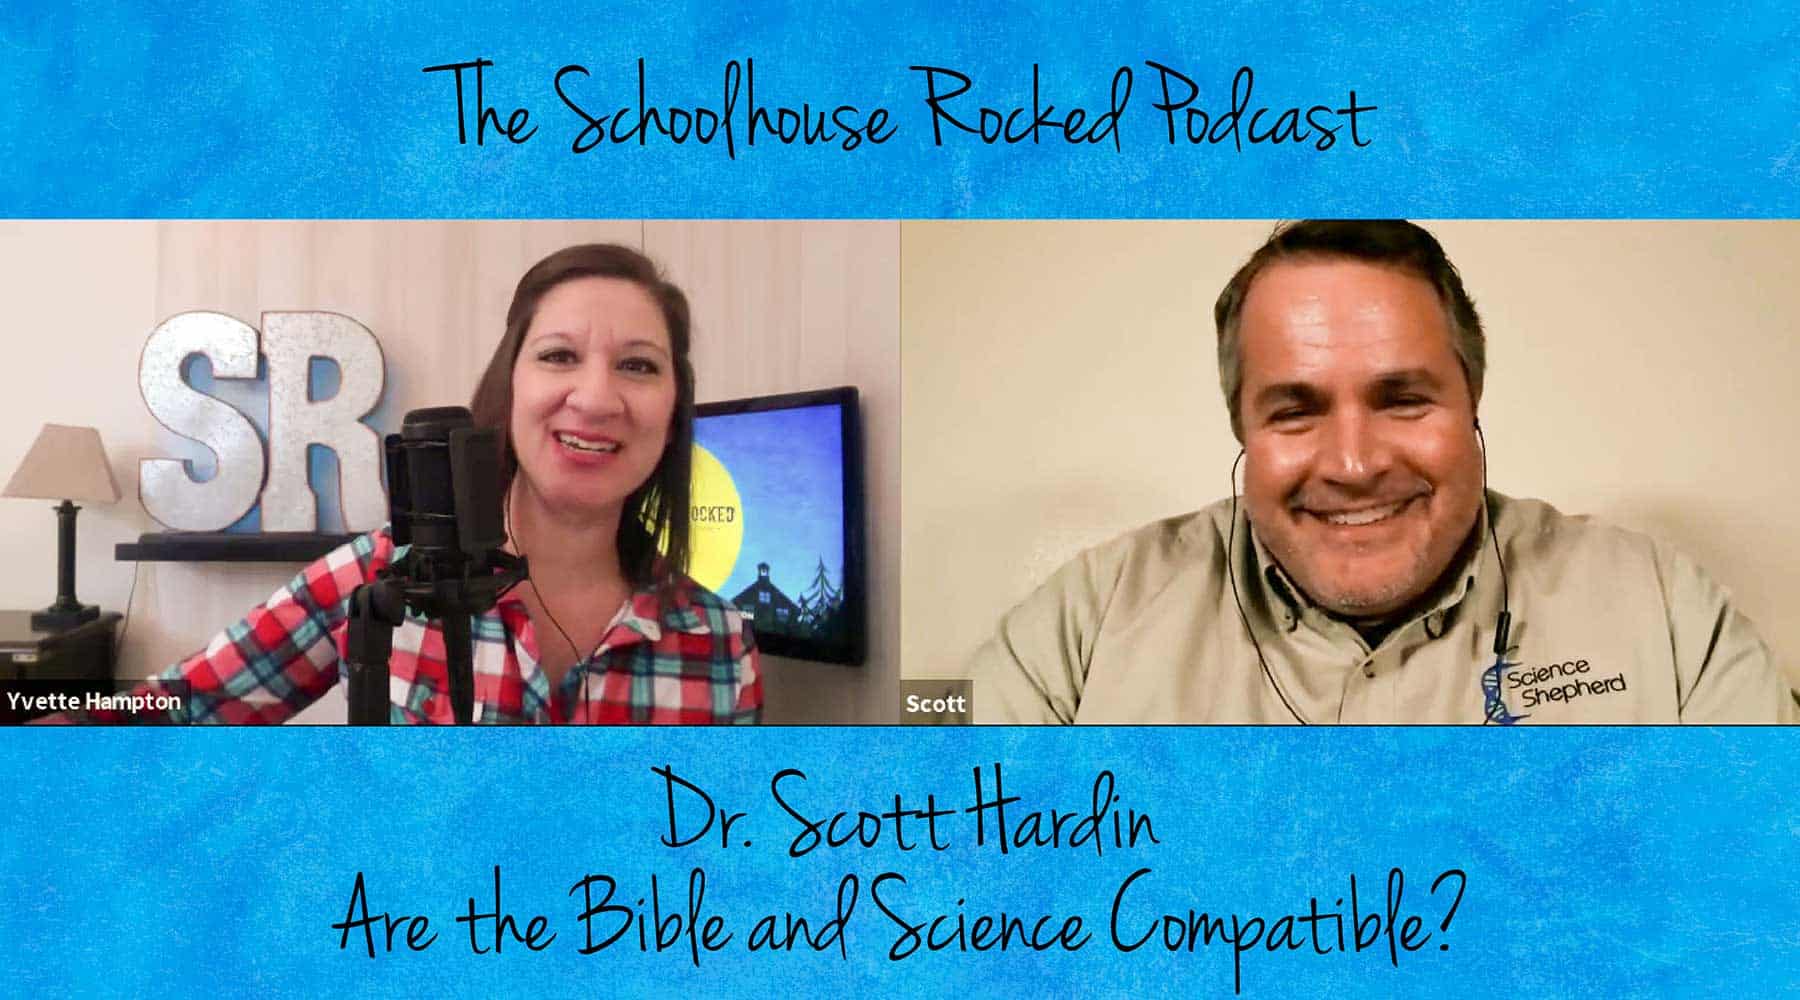 Dr. Hardin of Science Shepherd and Yvette Hampton of Schoolhouse Rocked